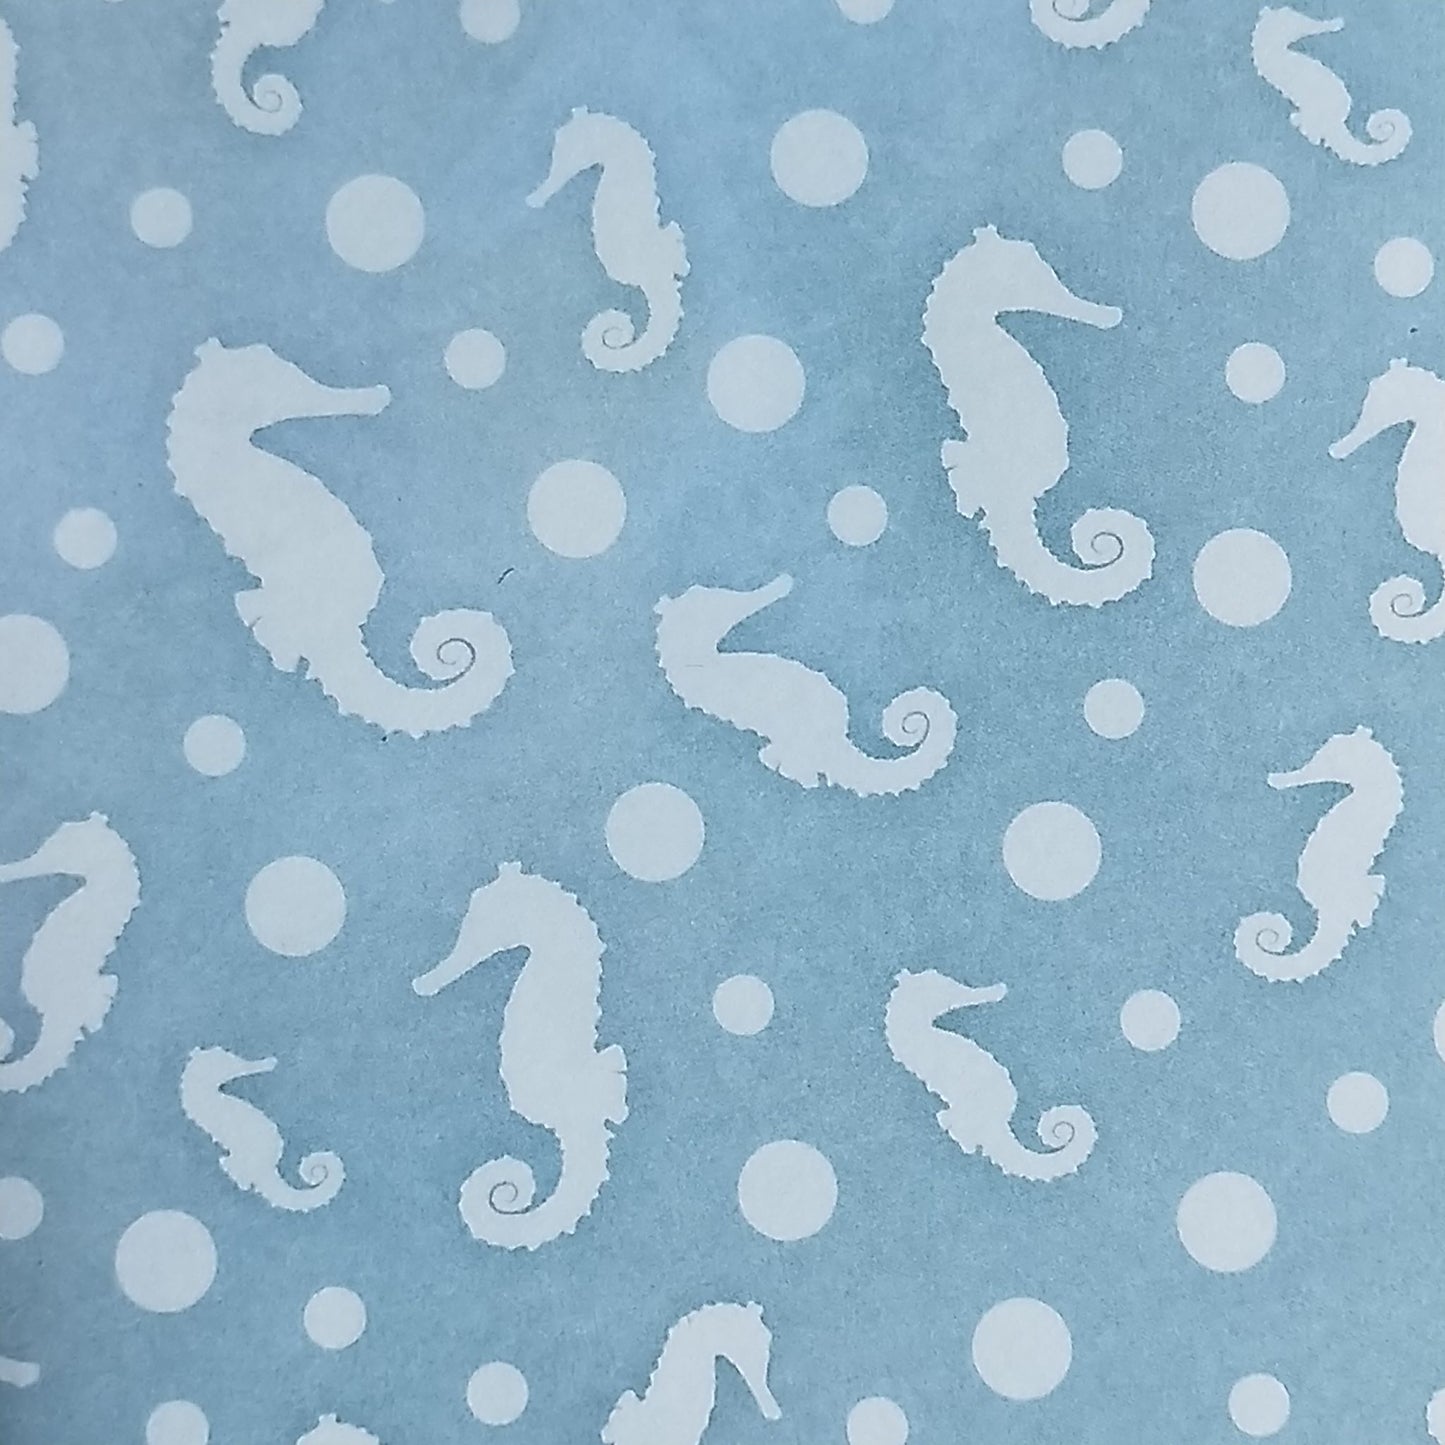 Wilddori 40 sheet Blank Insert - Ocean Blue Seahorse